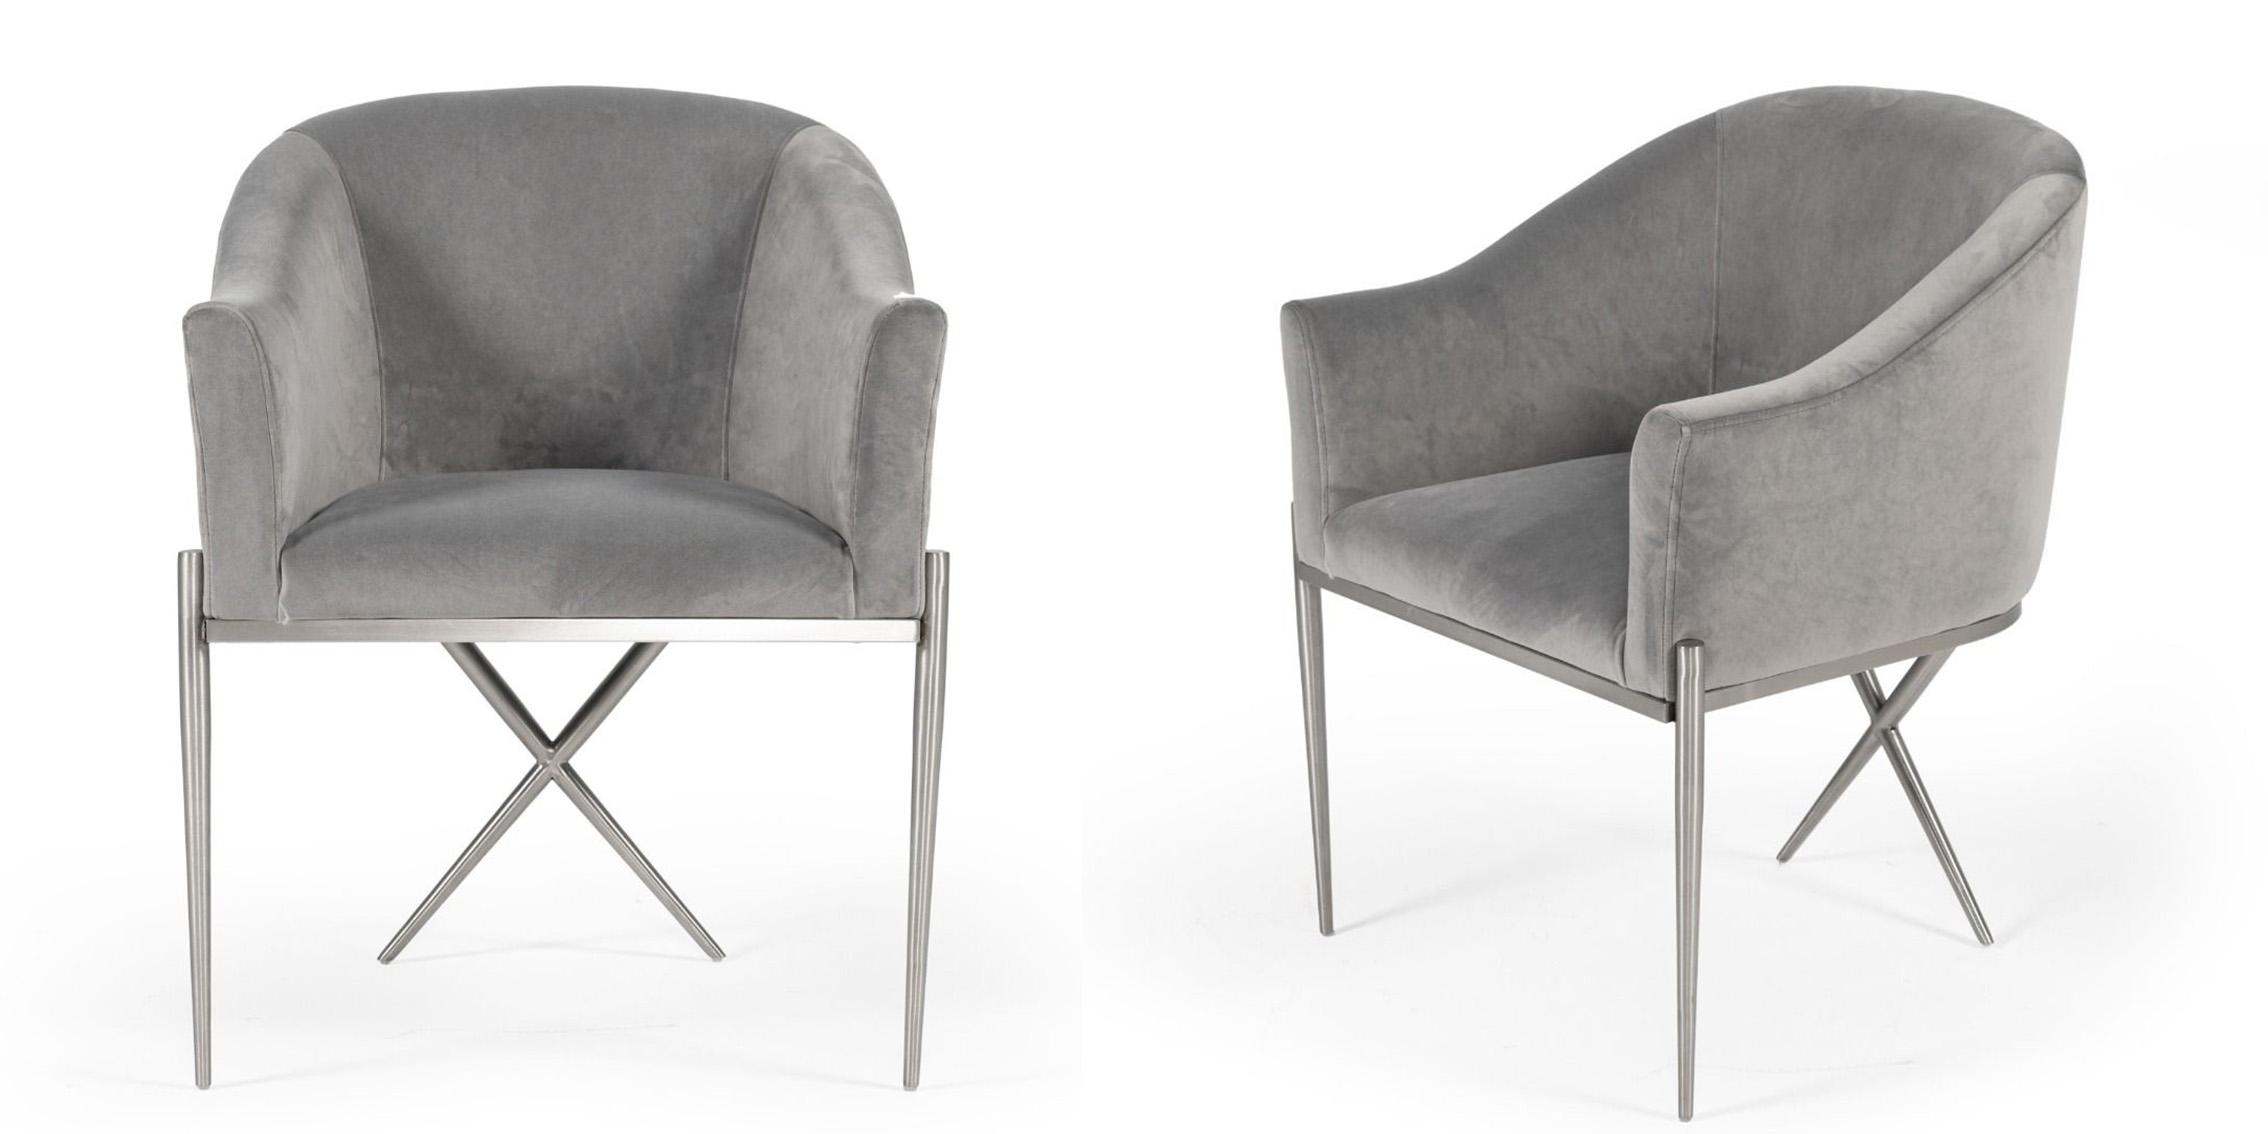 Contemporary, Modern Dining Chair Set VGMFOC-296-GRY-CH-Set-2 VGMFOC-296-GRY-CH-Set-2 in Gray Fabric